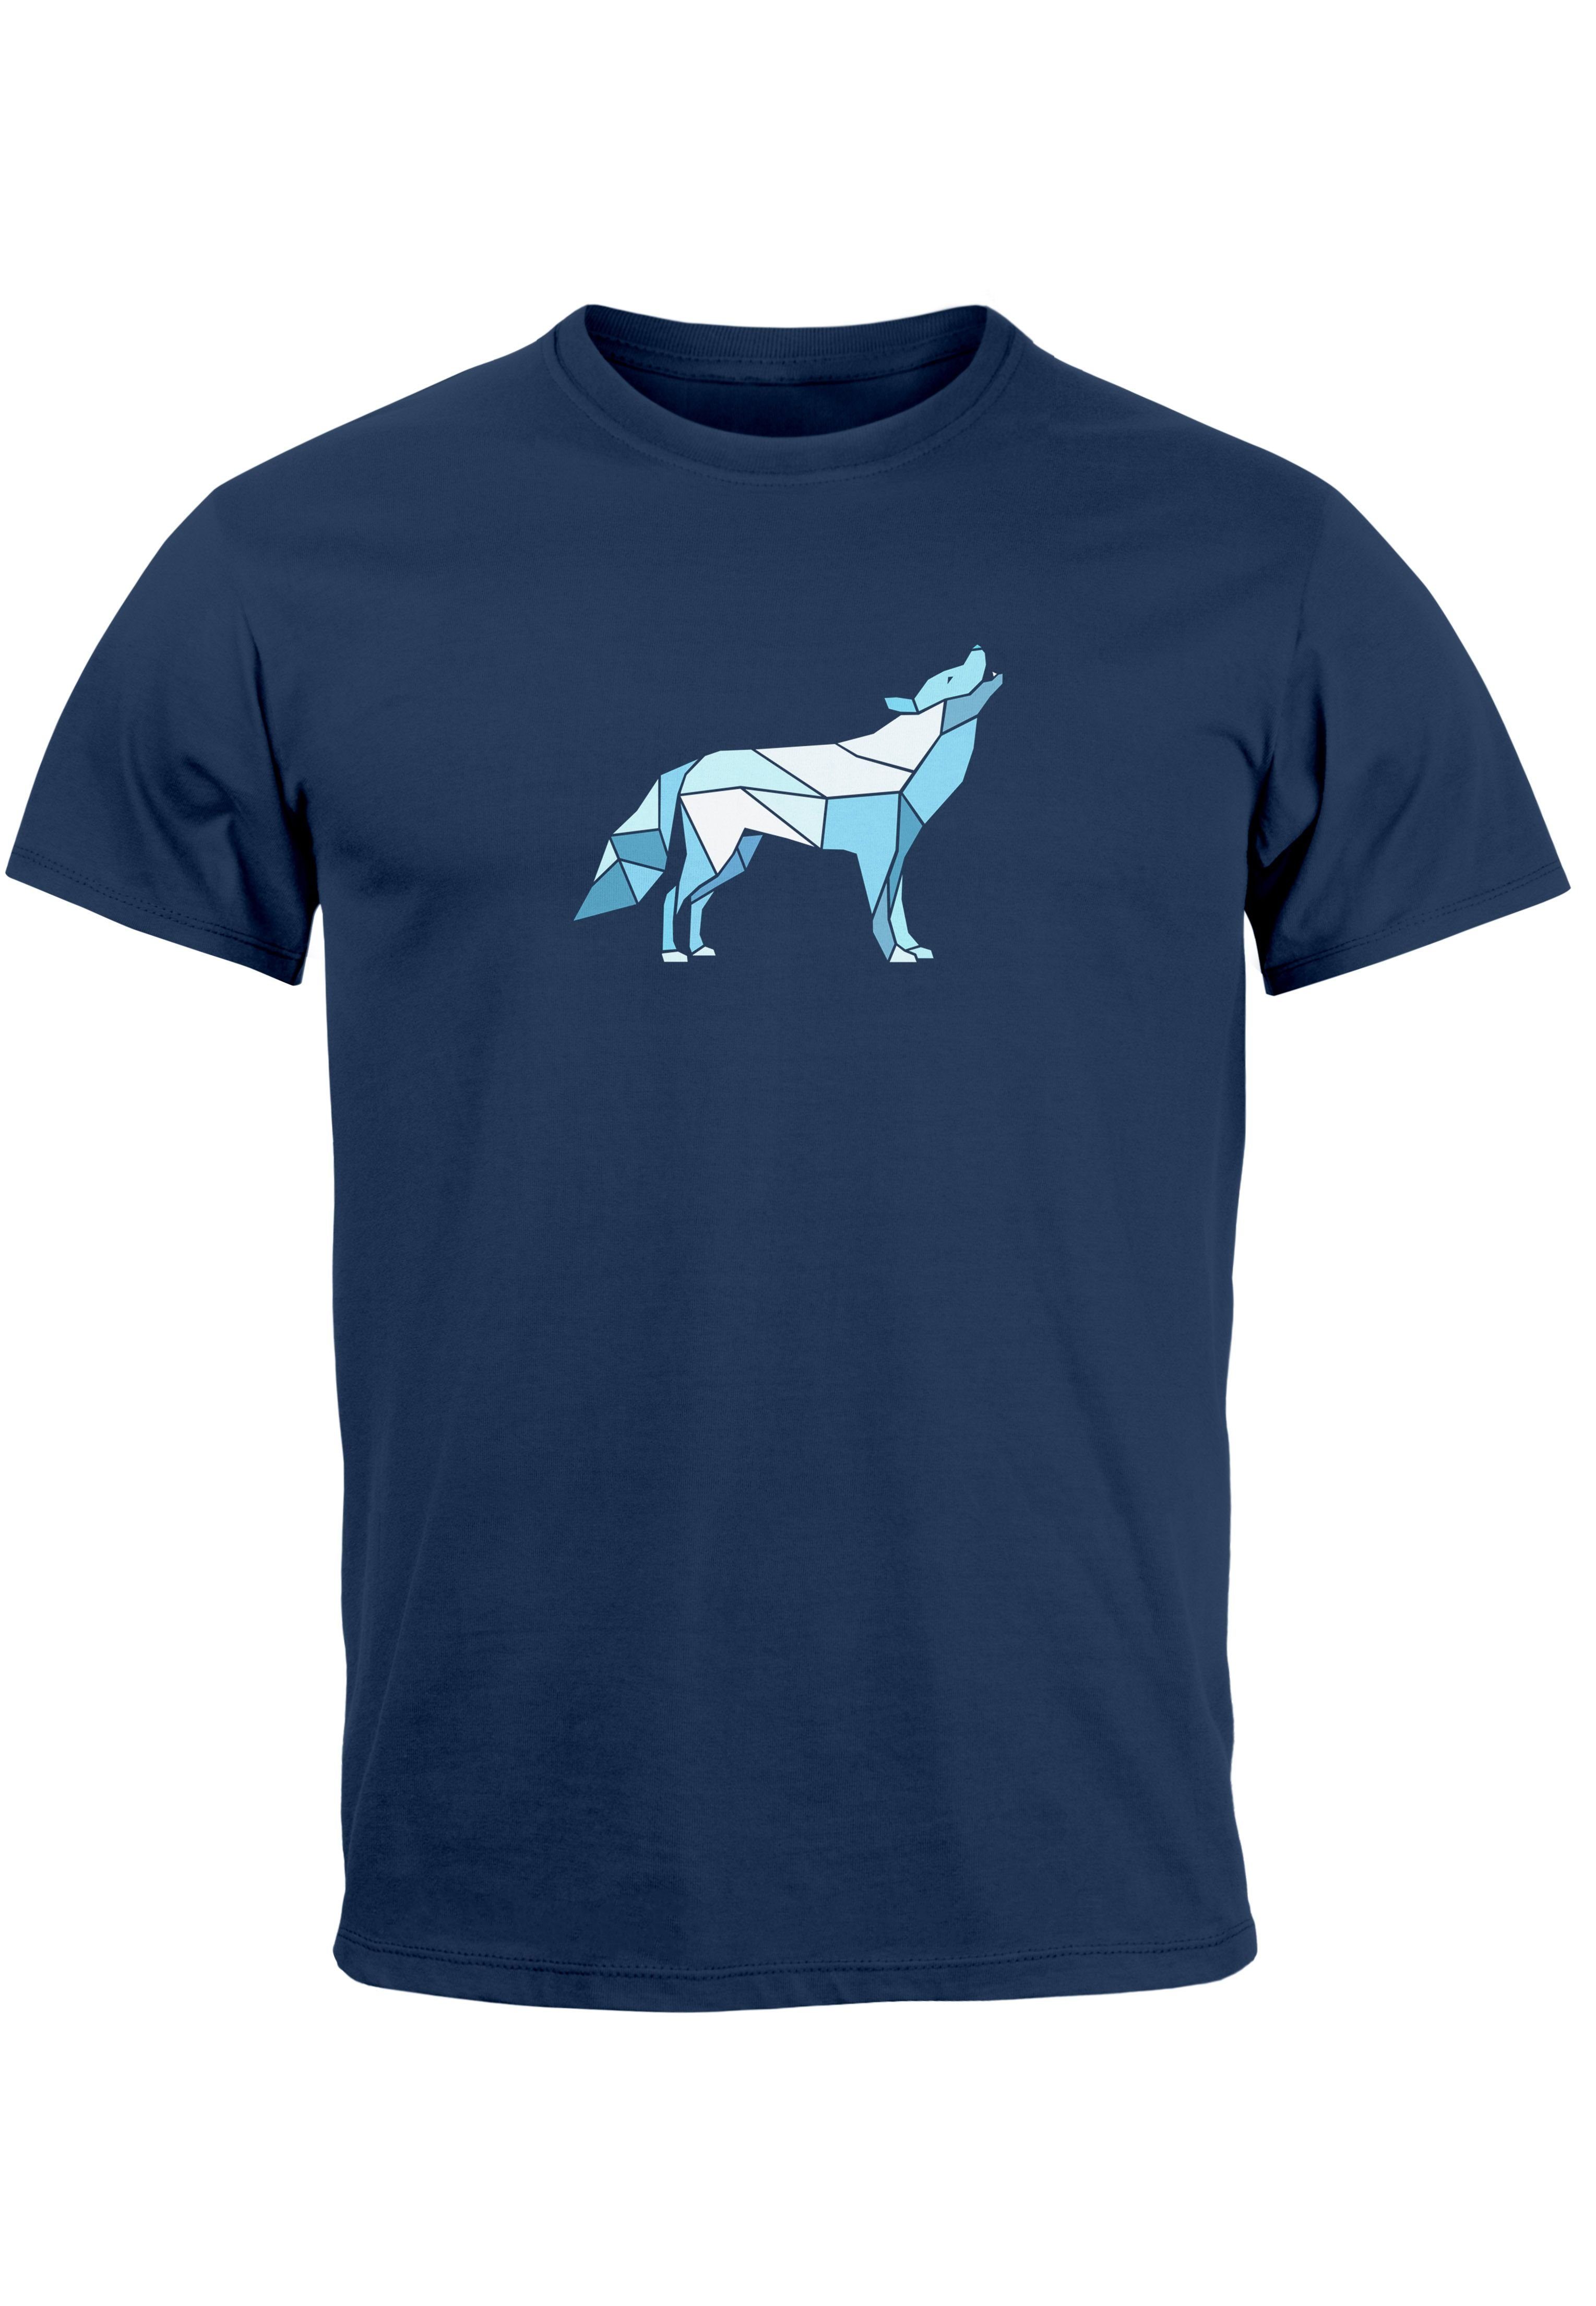 Herren Print-Shirt Fashion Outdoor T-Shirt navy Print Neverless mit Bedruckt Grafik Polygon Wolf Tiermotiv